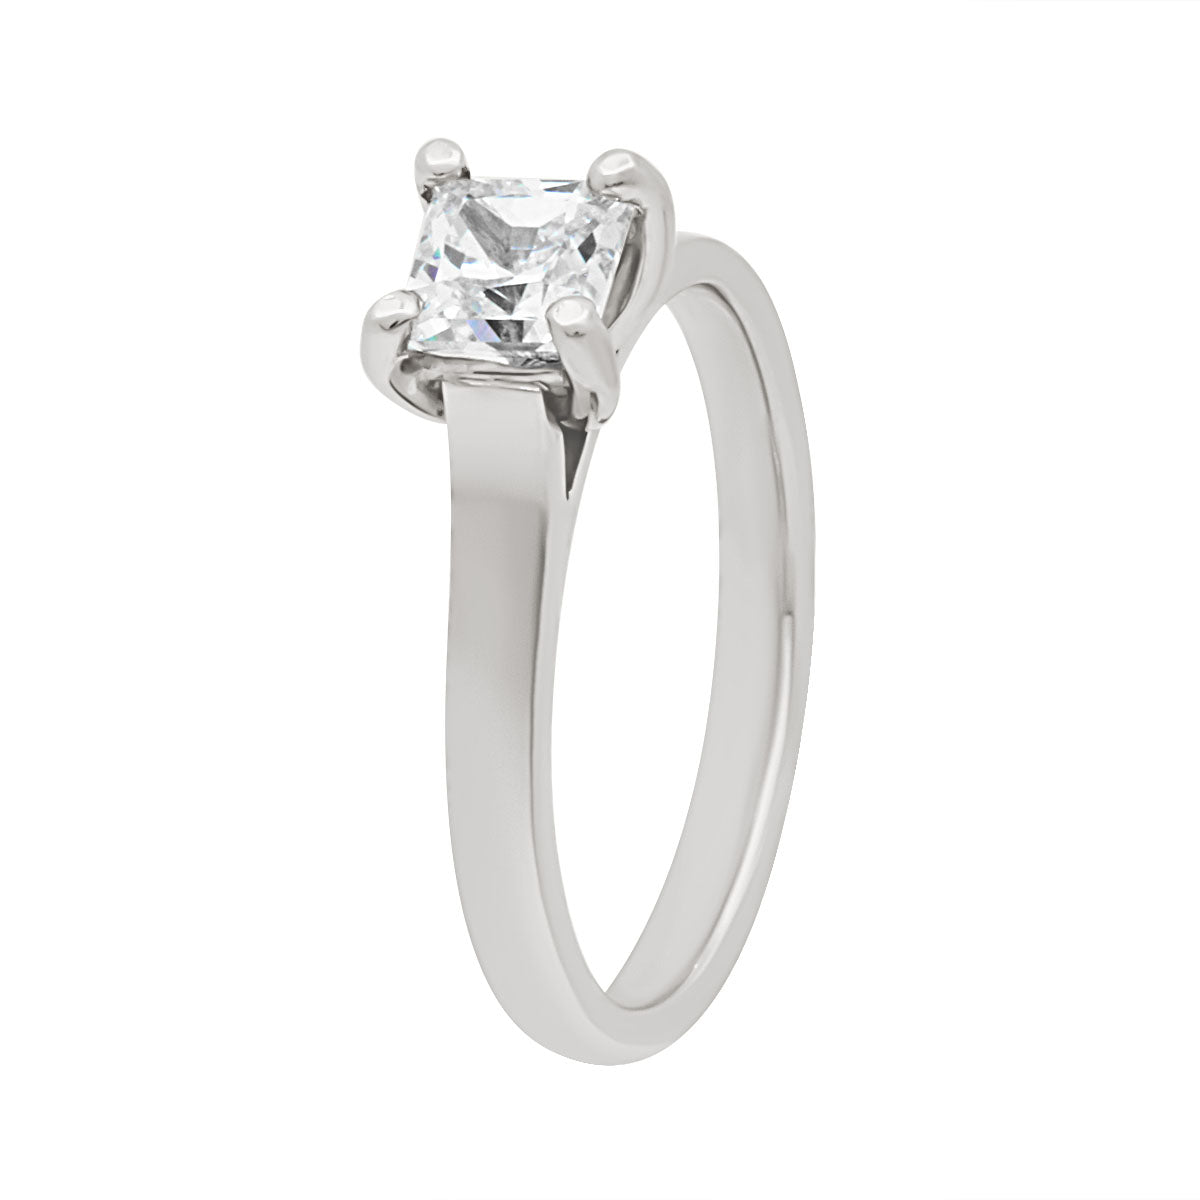 Princess cut engagement ring in platinum at an angle